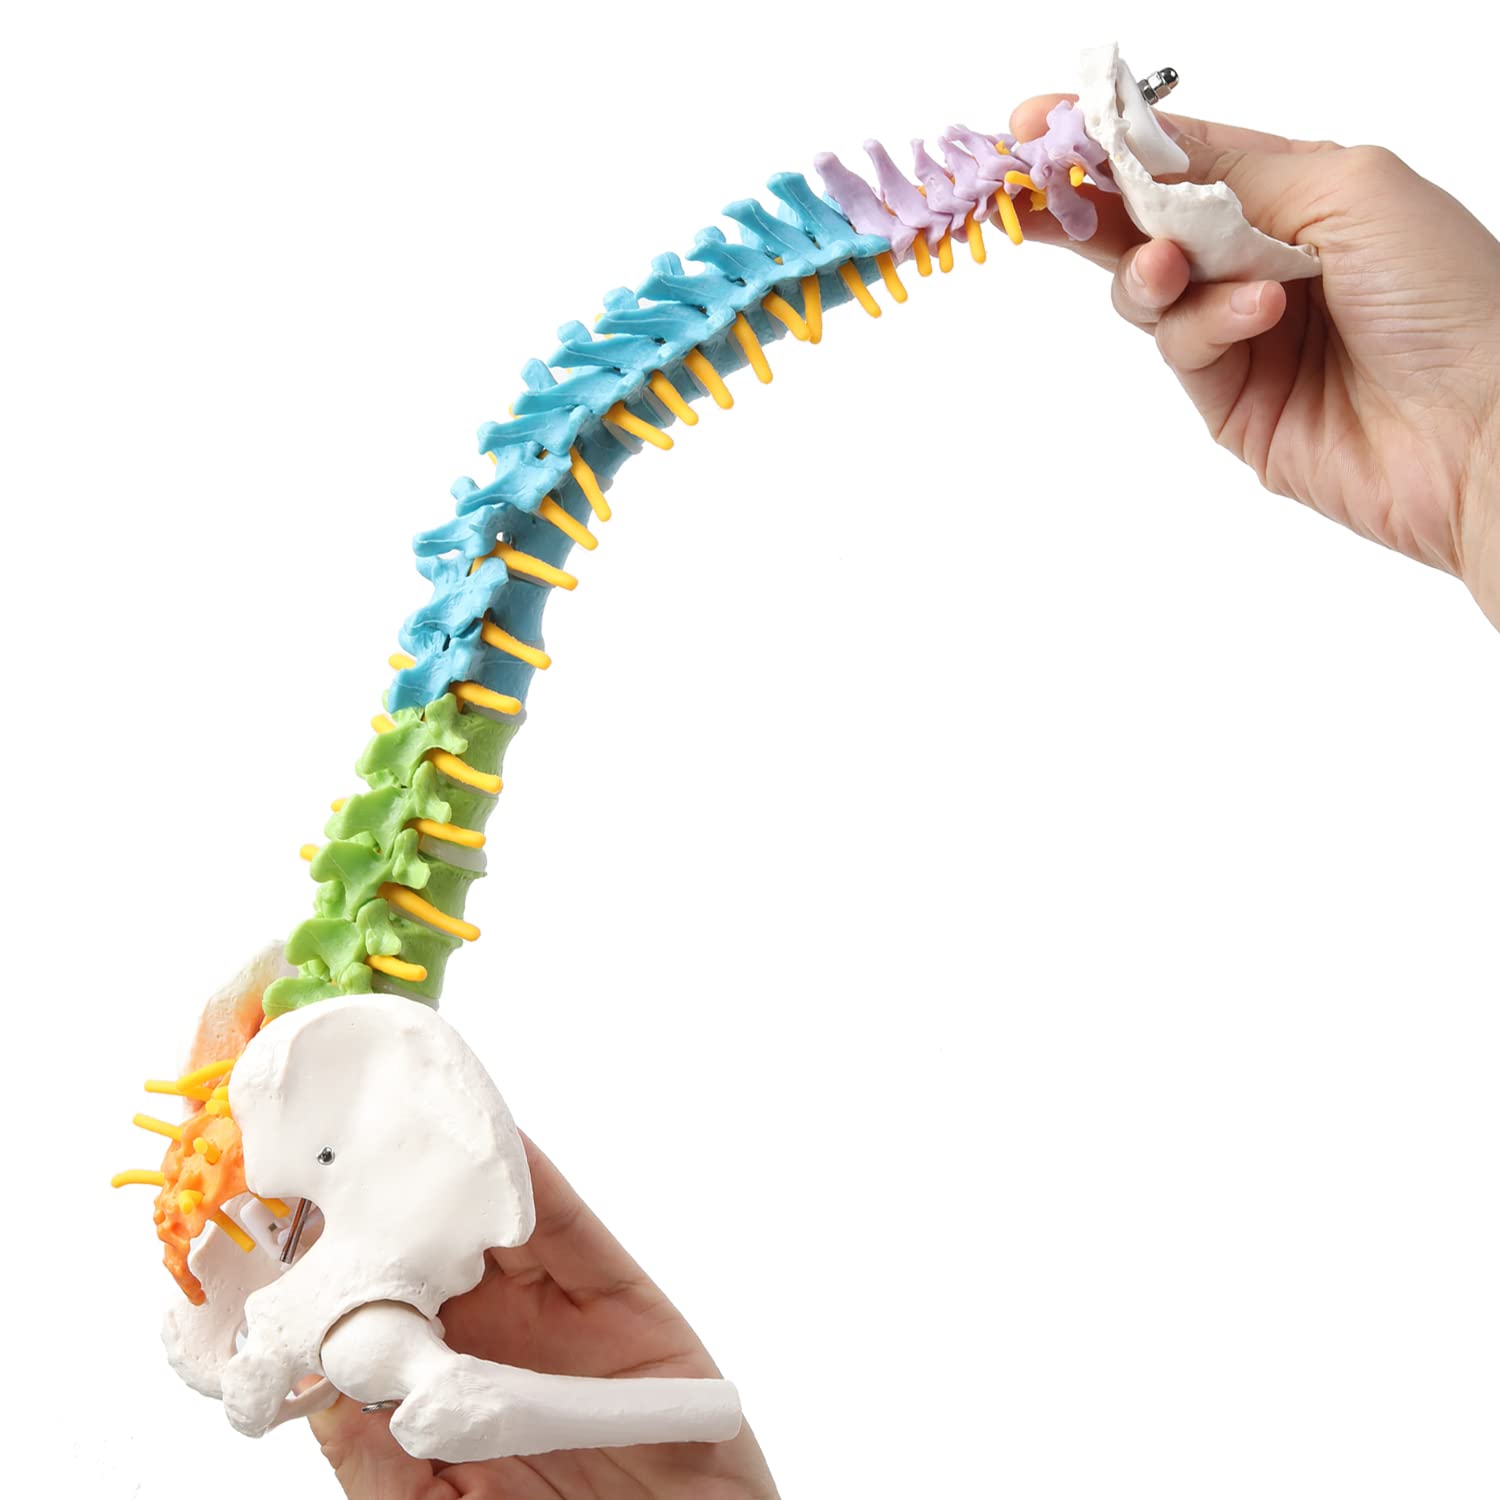 RONTEN Spine Model 16.5" Colorful Human Spine Anatomy Model